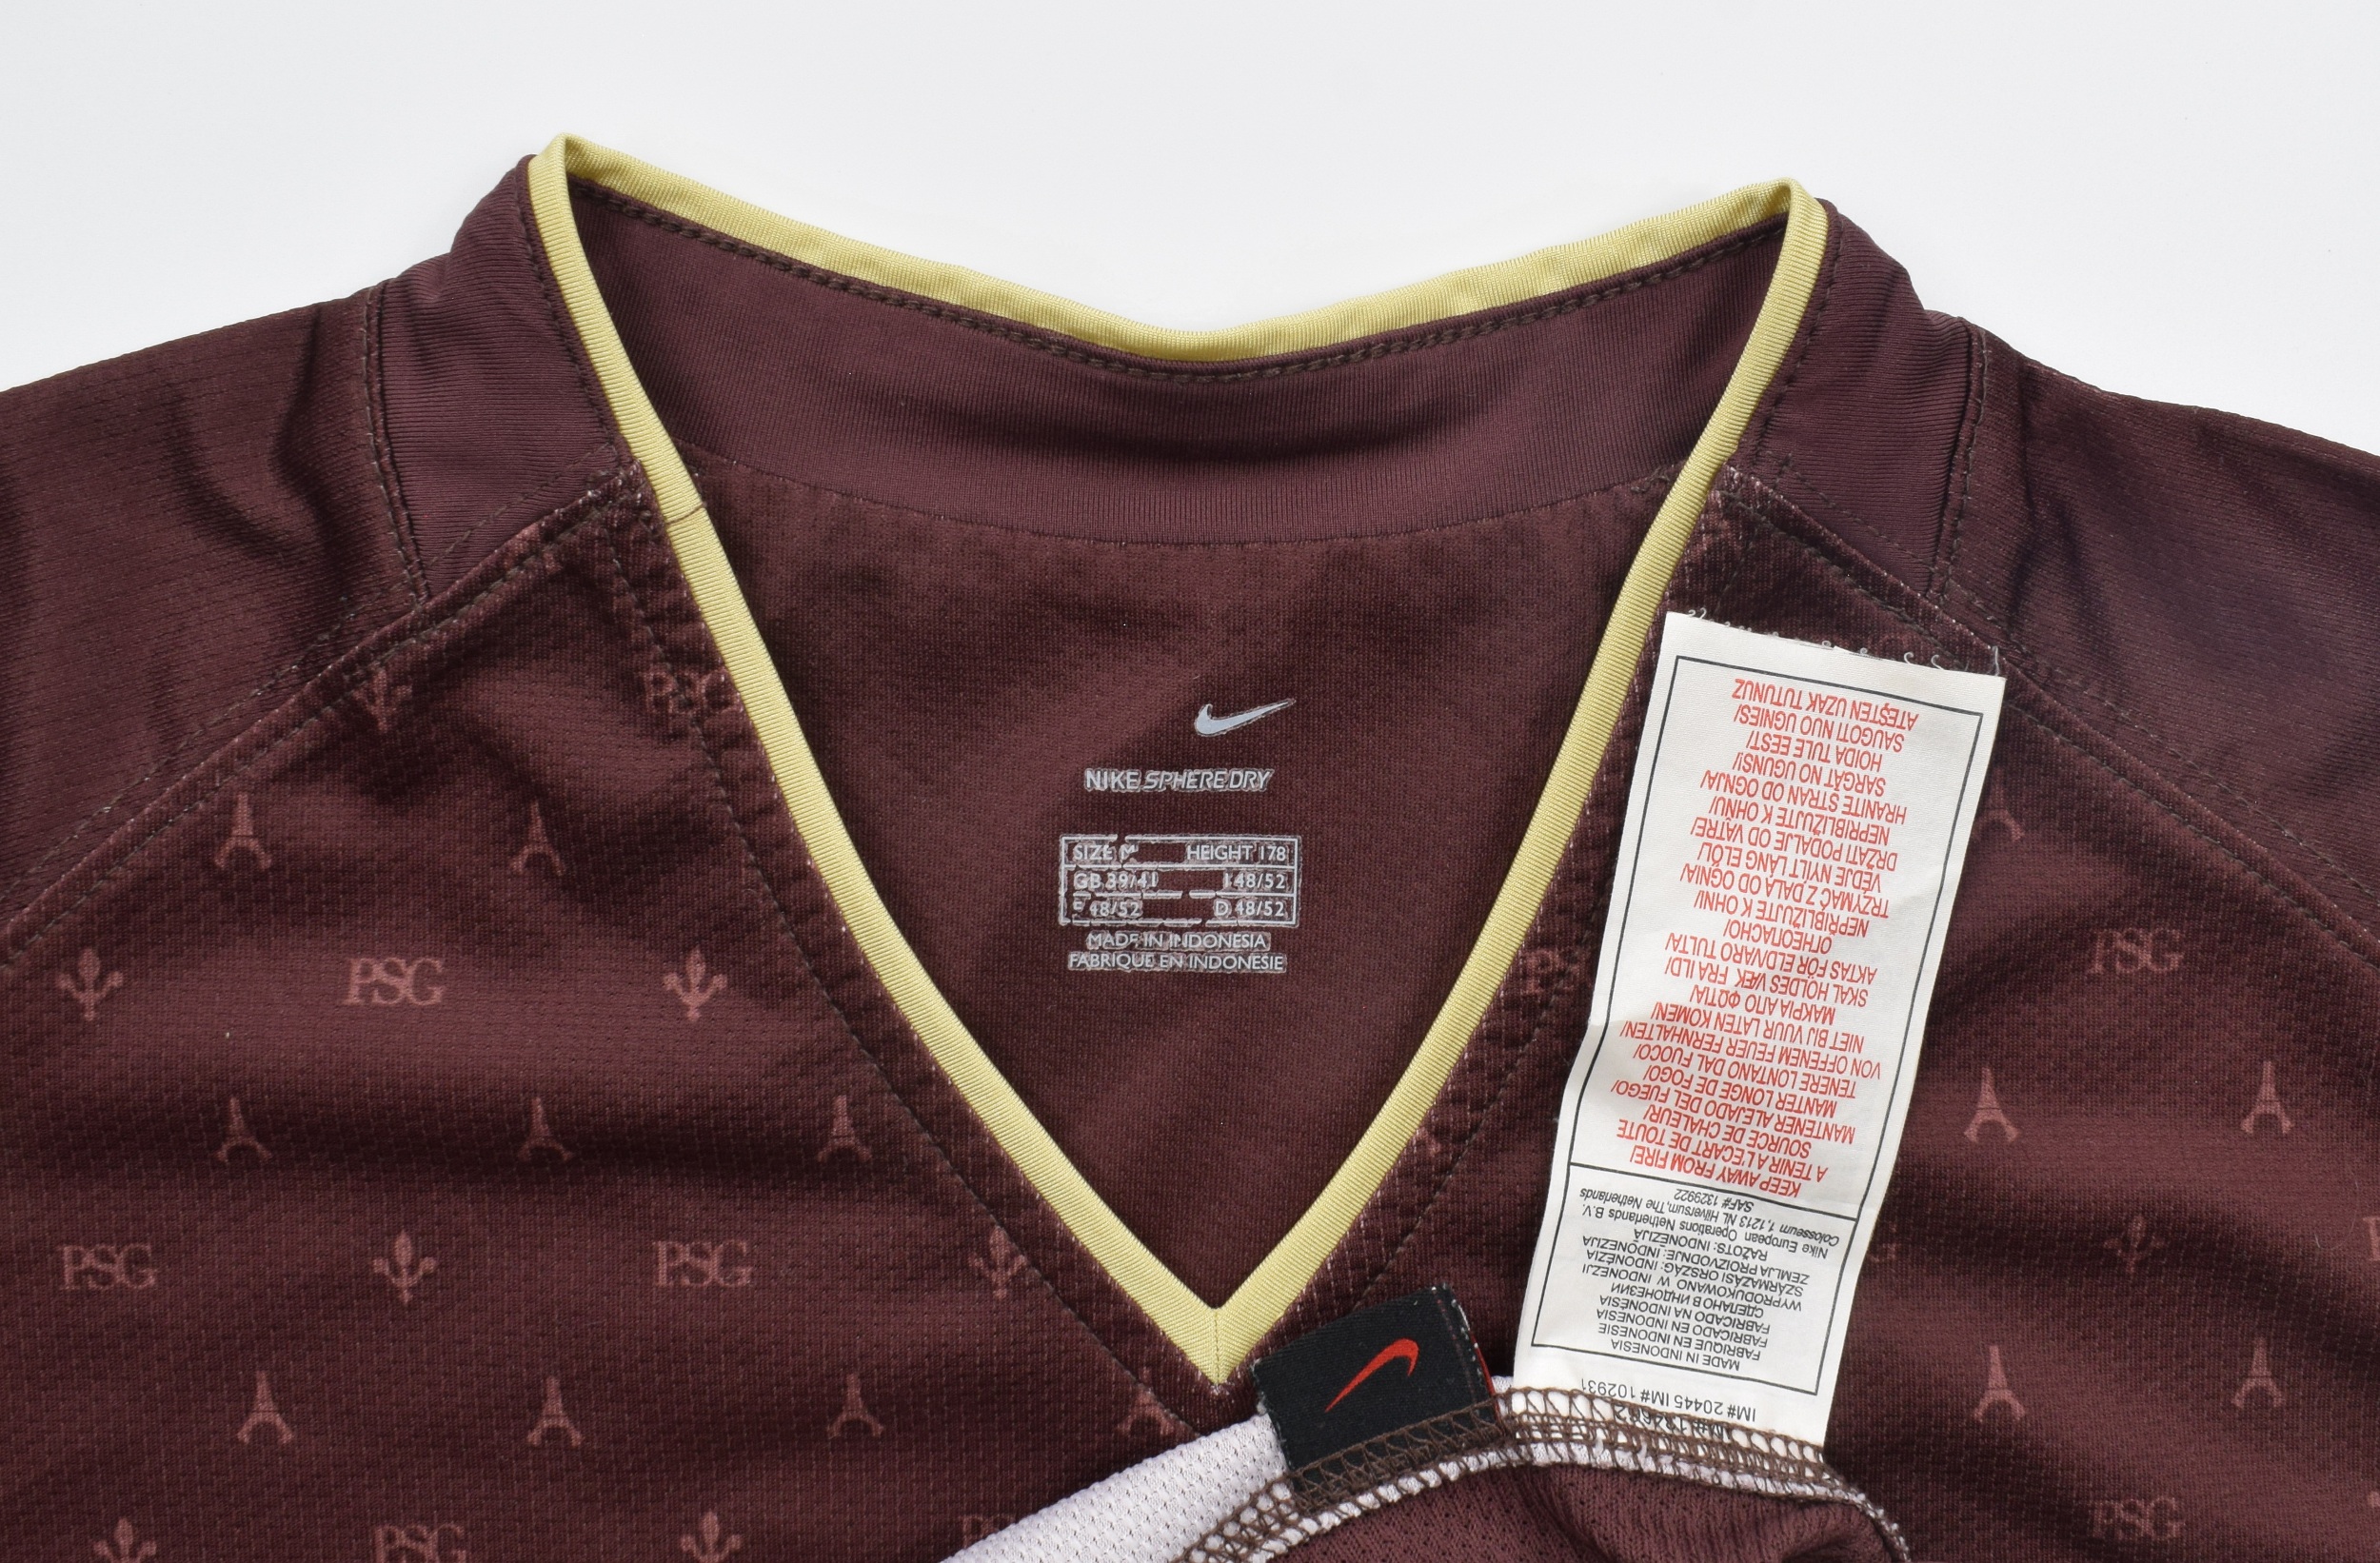 PSG 2006-2007 chocolate Nike XL for Women Paris France rare football shirt